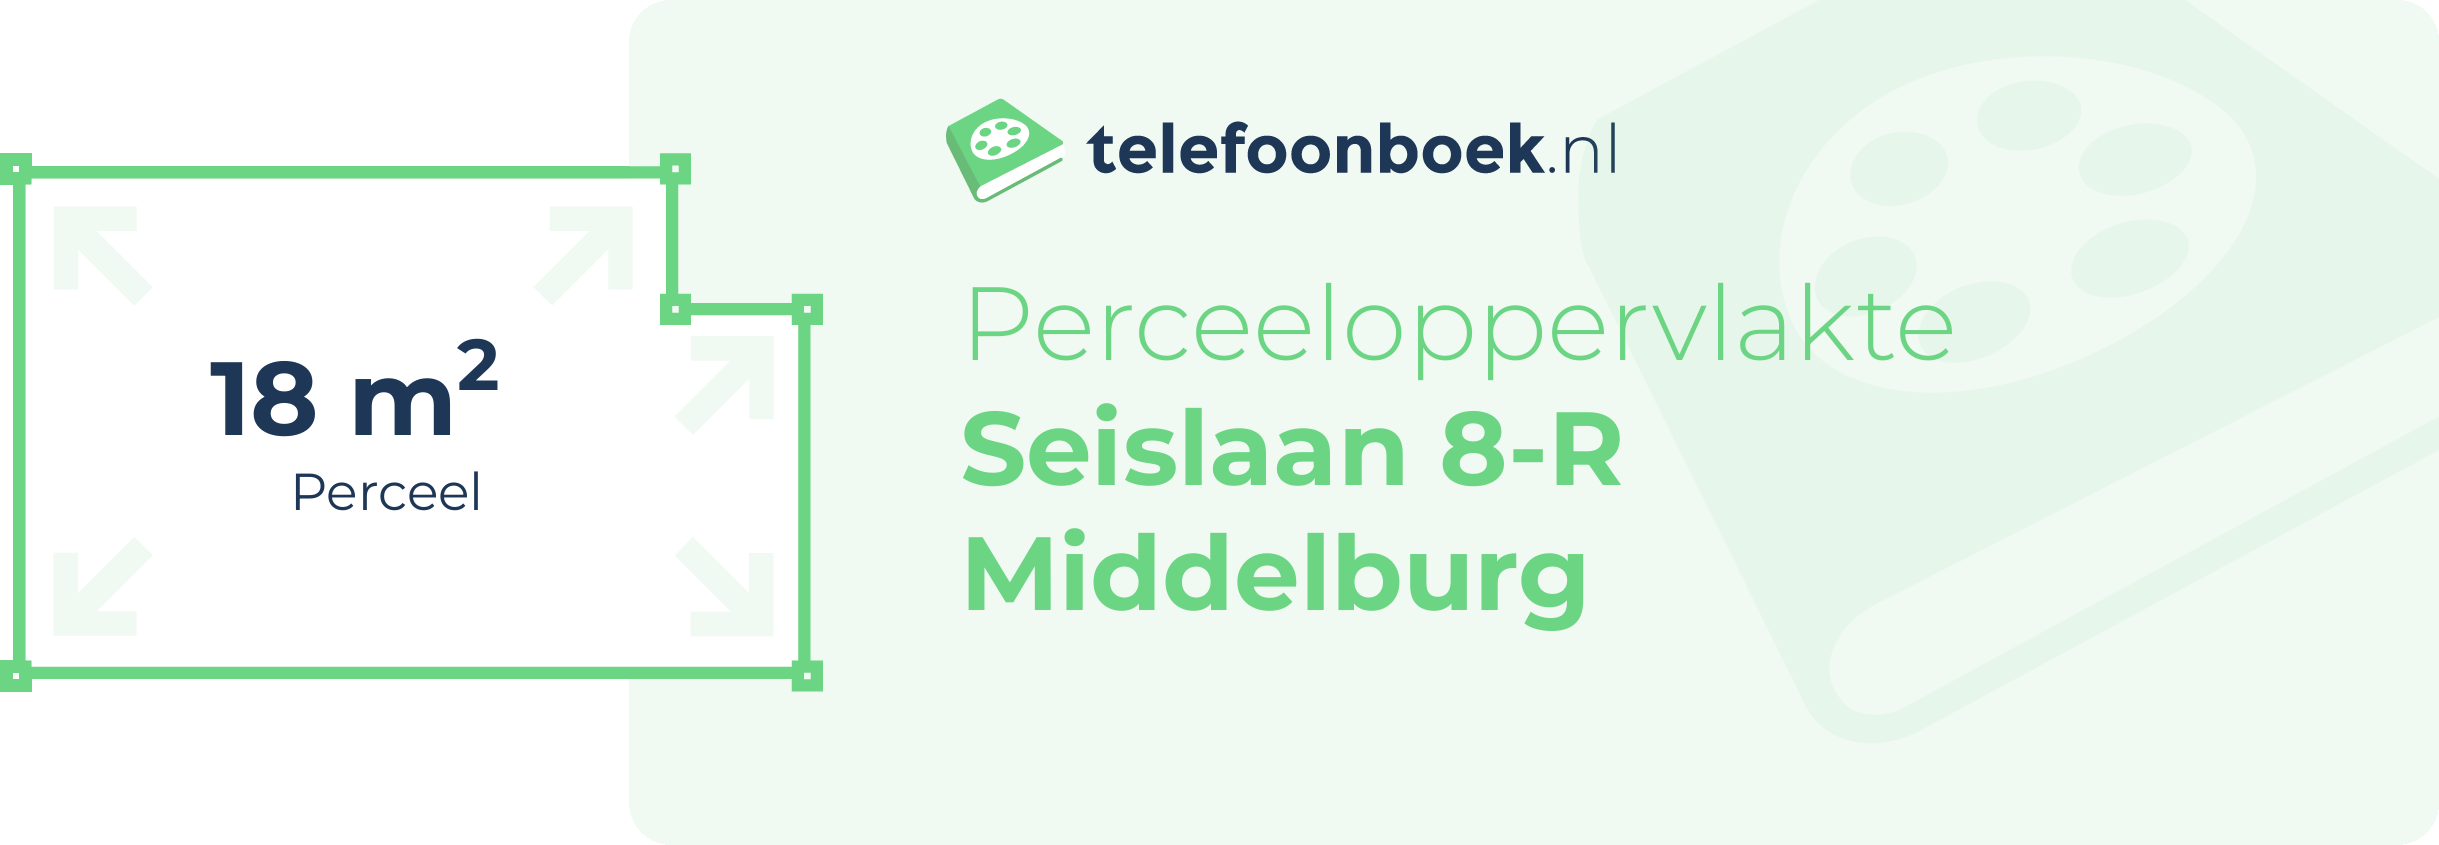 Perceeloppervlakte Seislaan 8-R Middelburg